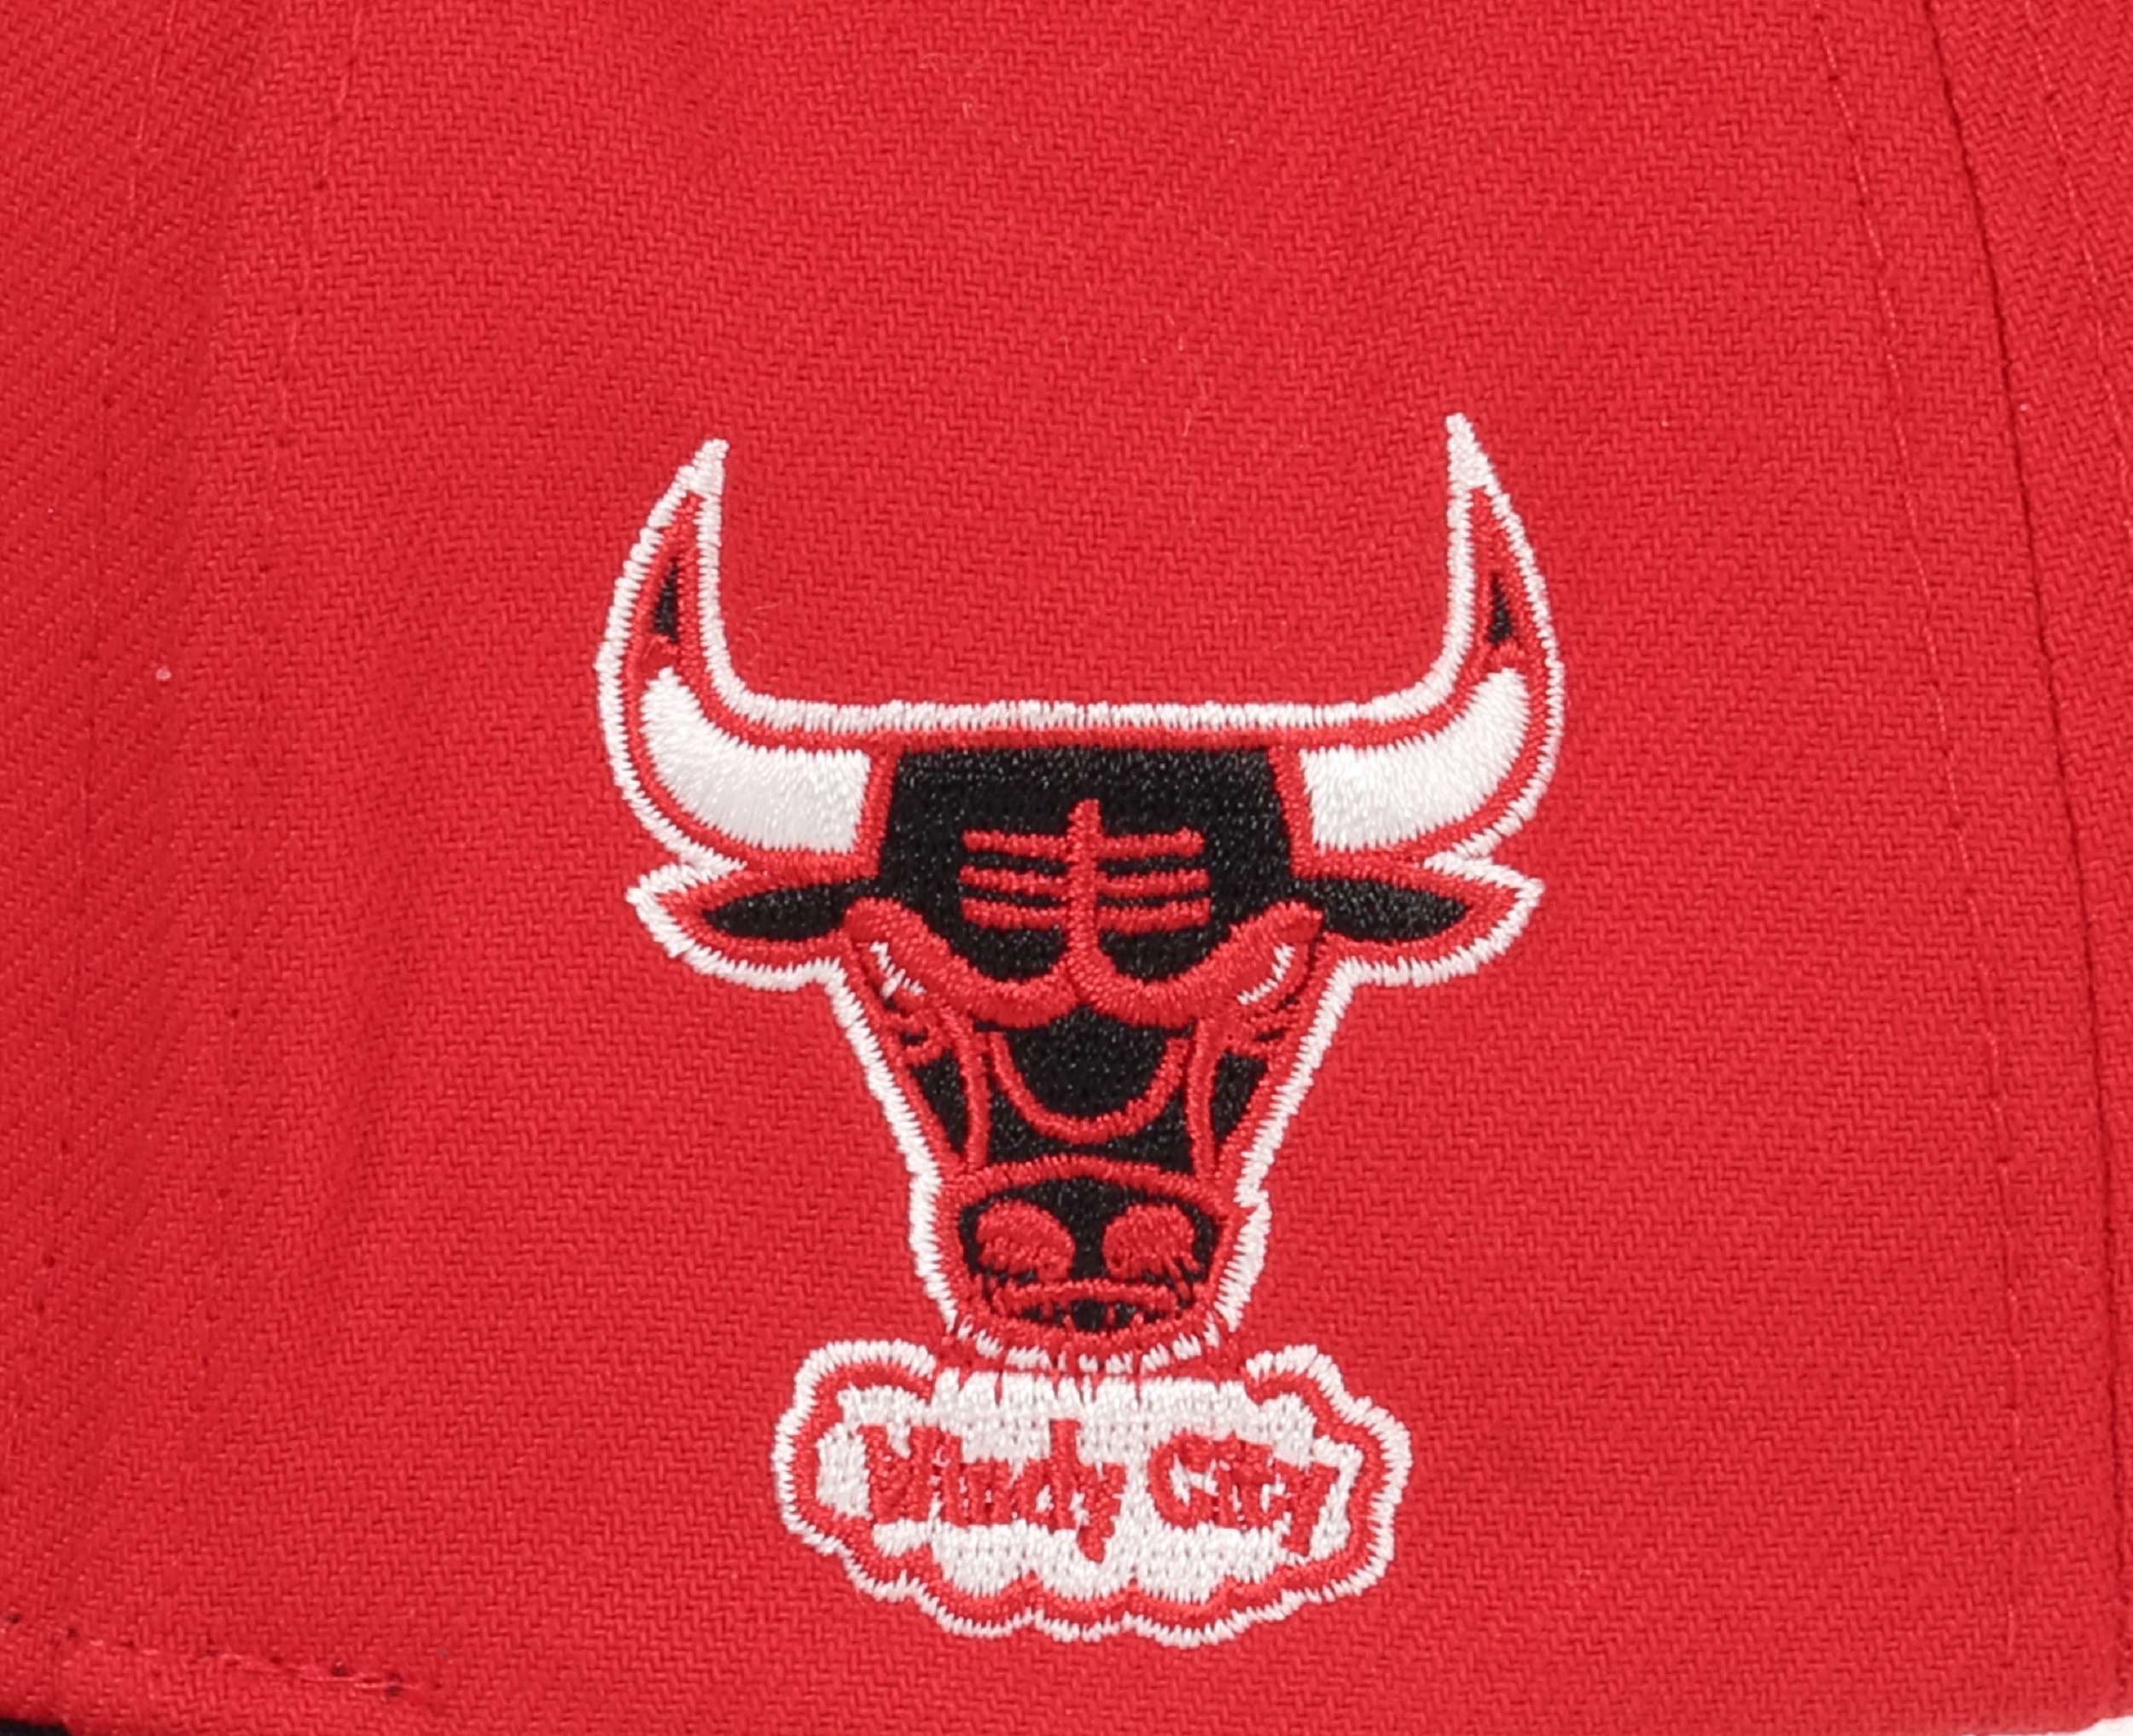 Chicago Bulls NBA Team Script 2.0 Rot Schwarz Verstellbare Gebogene Snapback Cap Mitchell & Ness